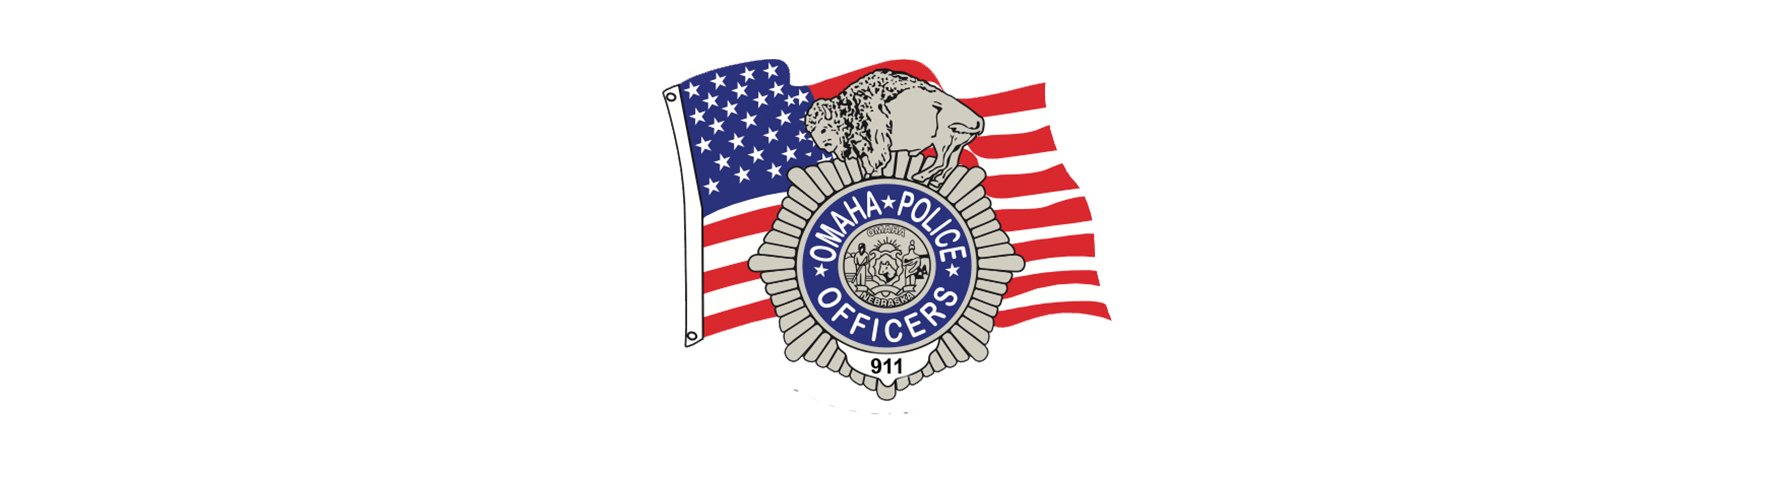 Officer Logo - Omaha Police Officers Association